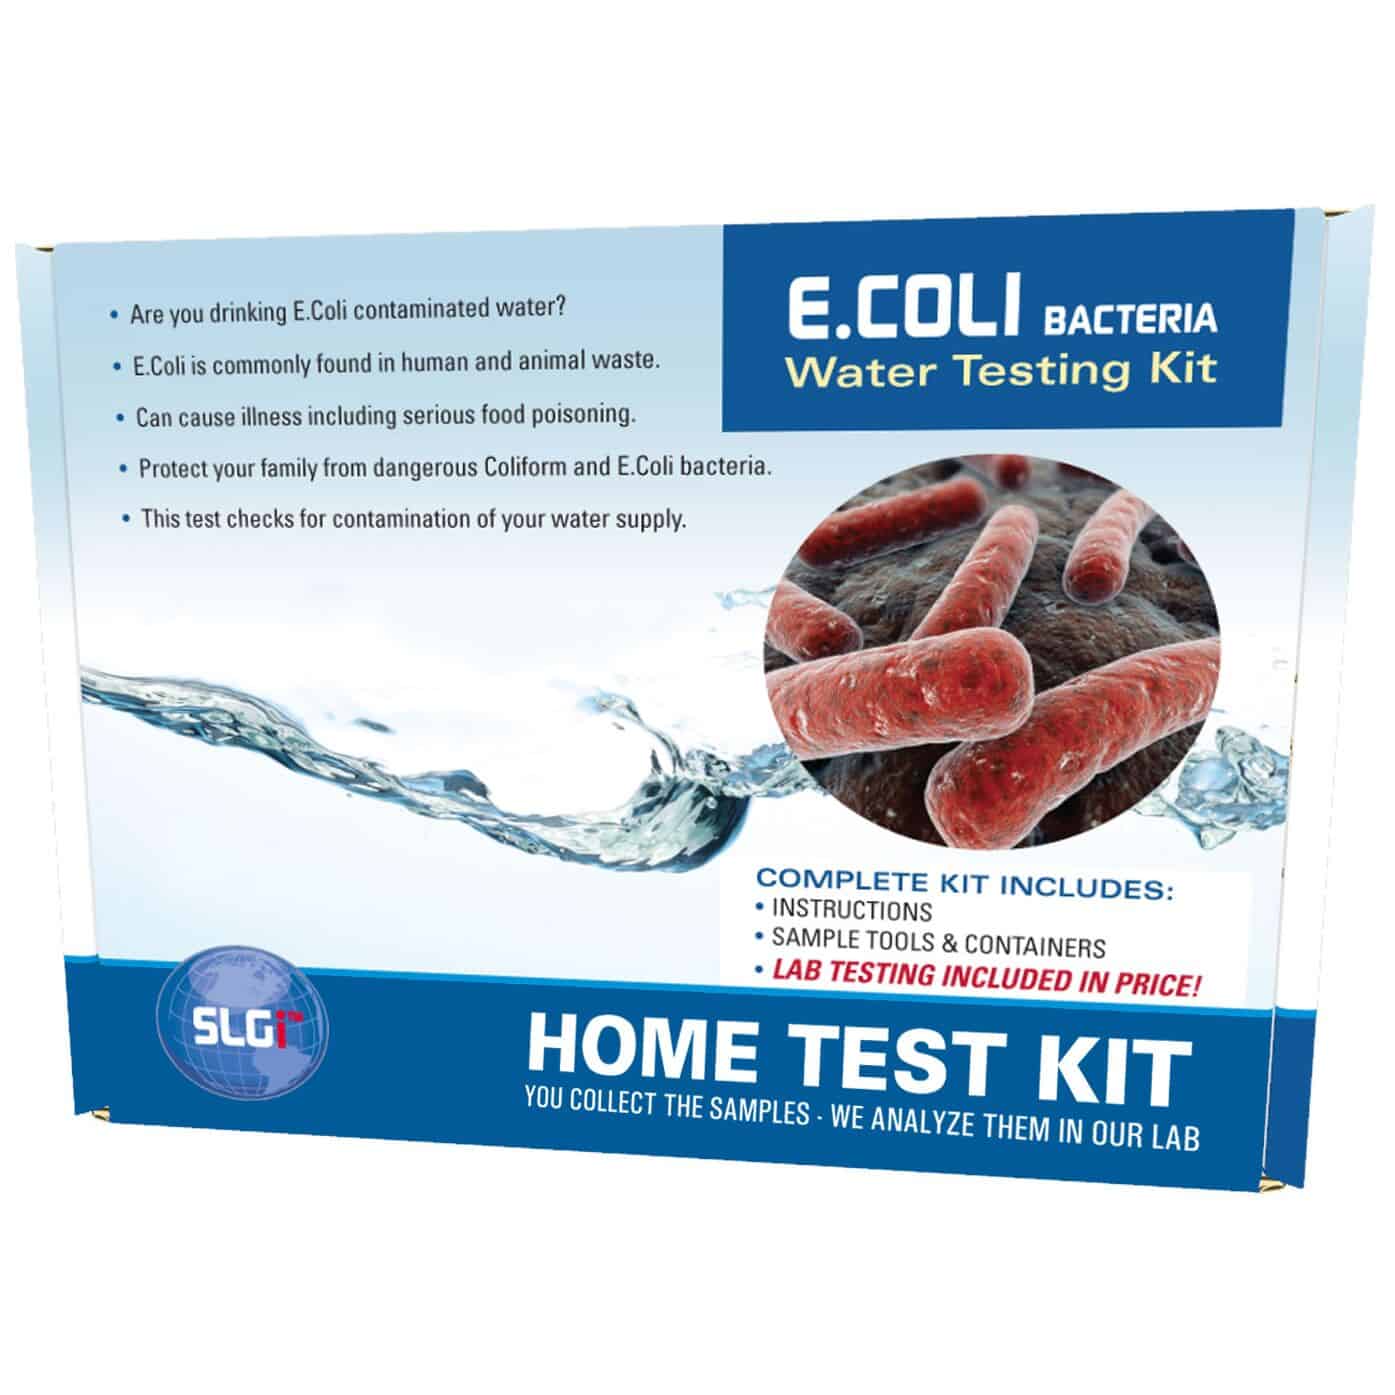 Toxic Metals in Solids or Liquids Test Kit